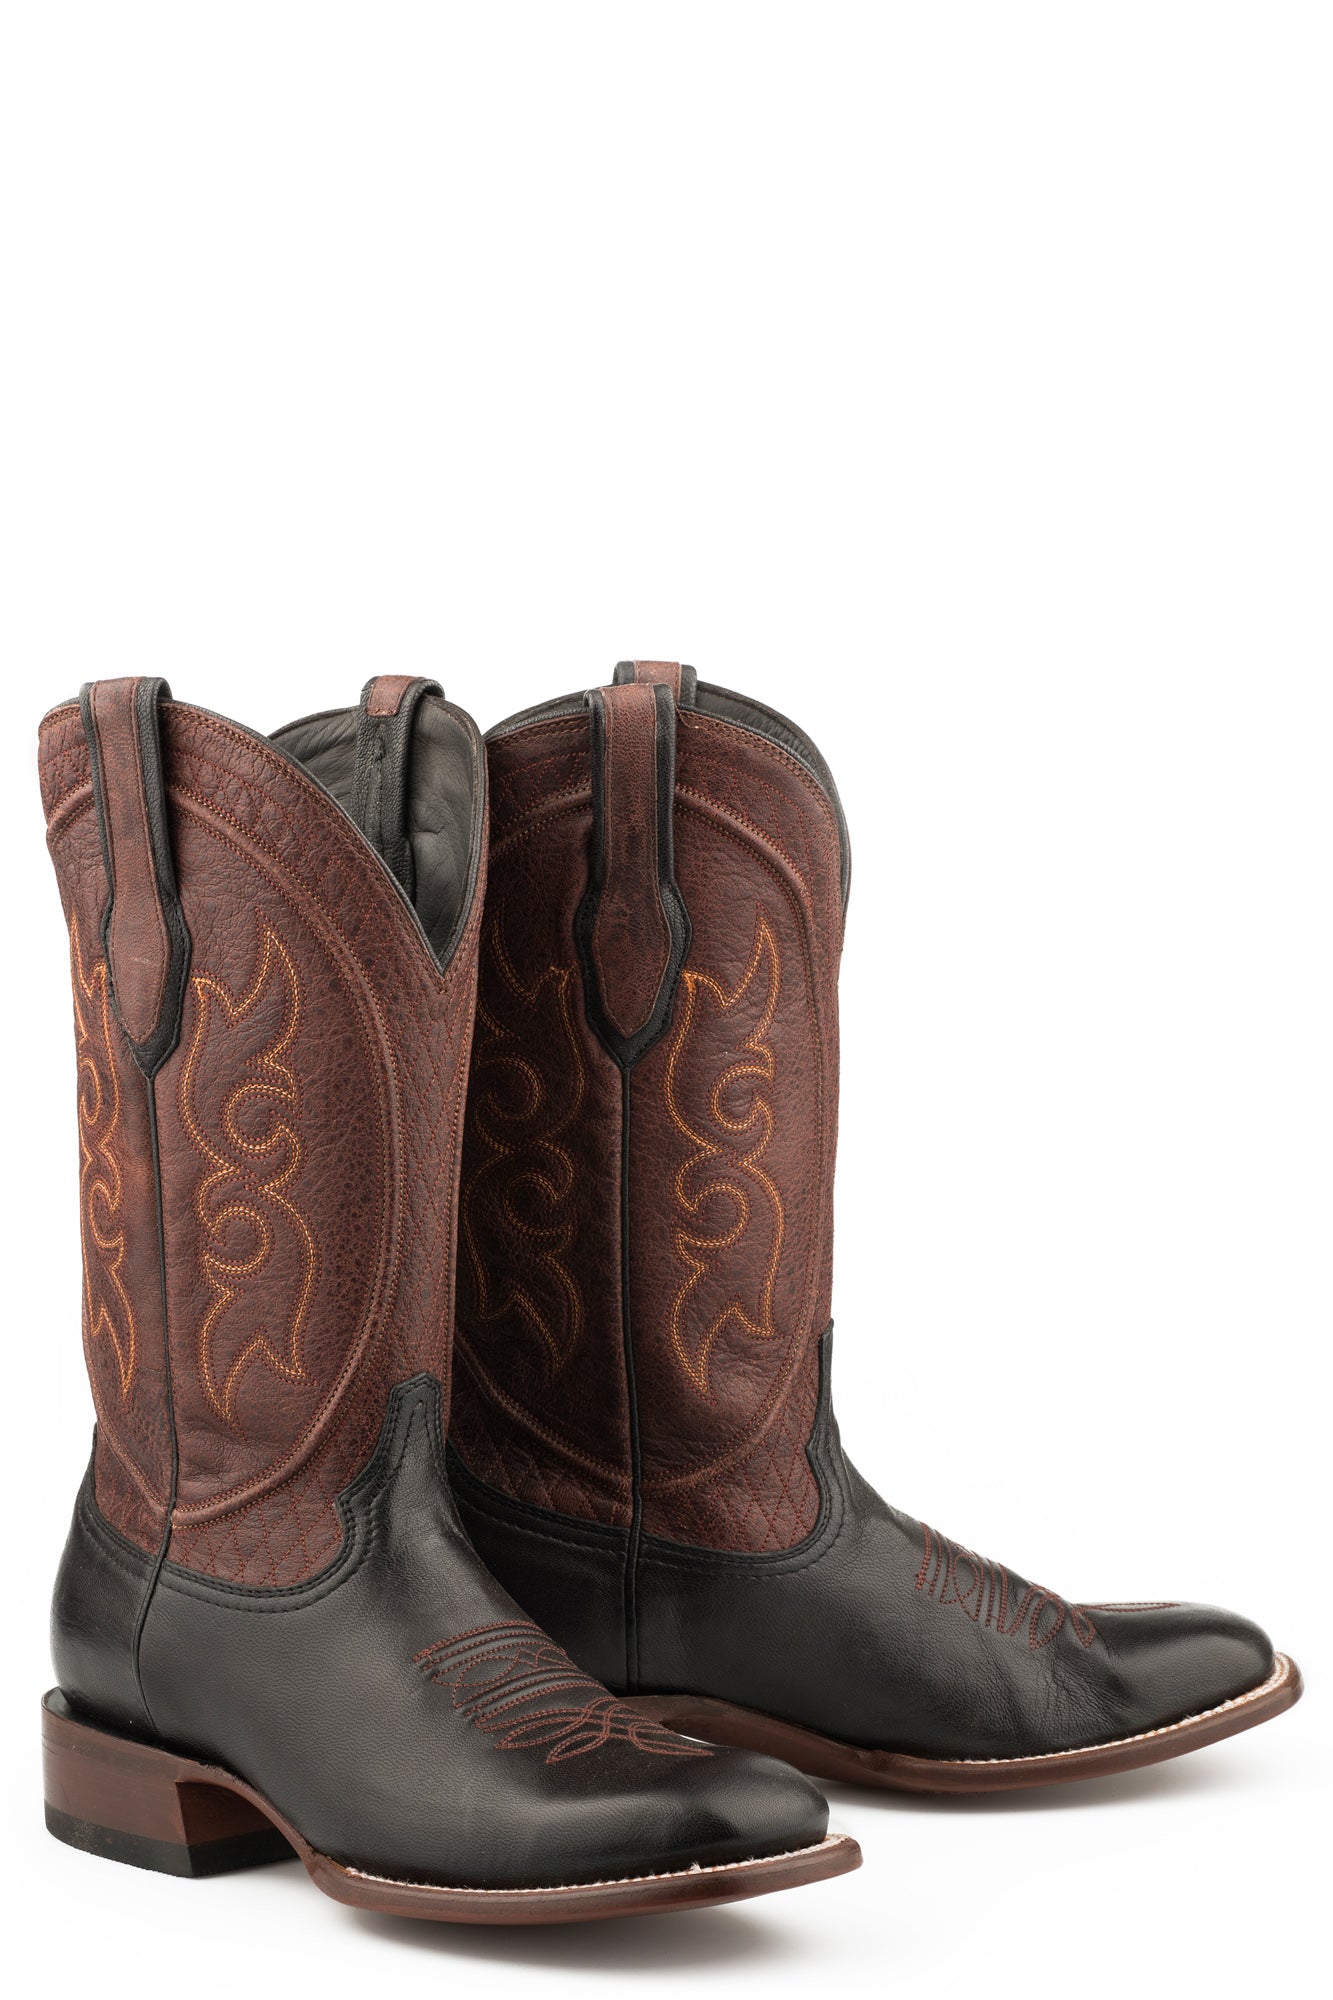 goat leather cowboy boots